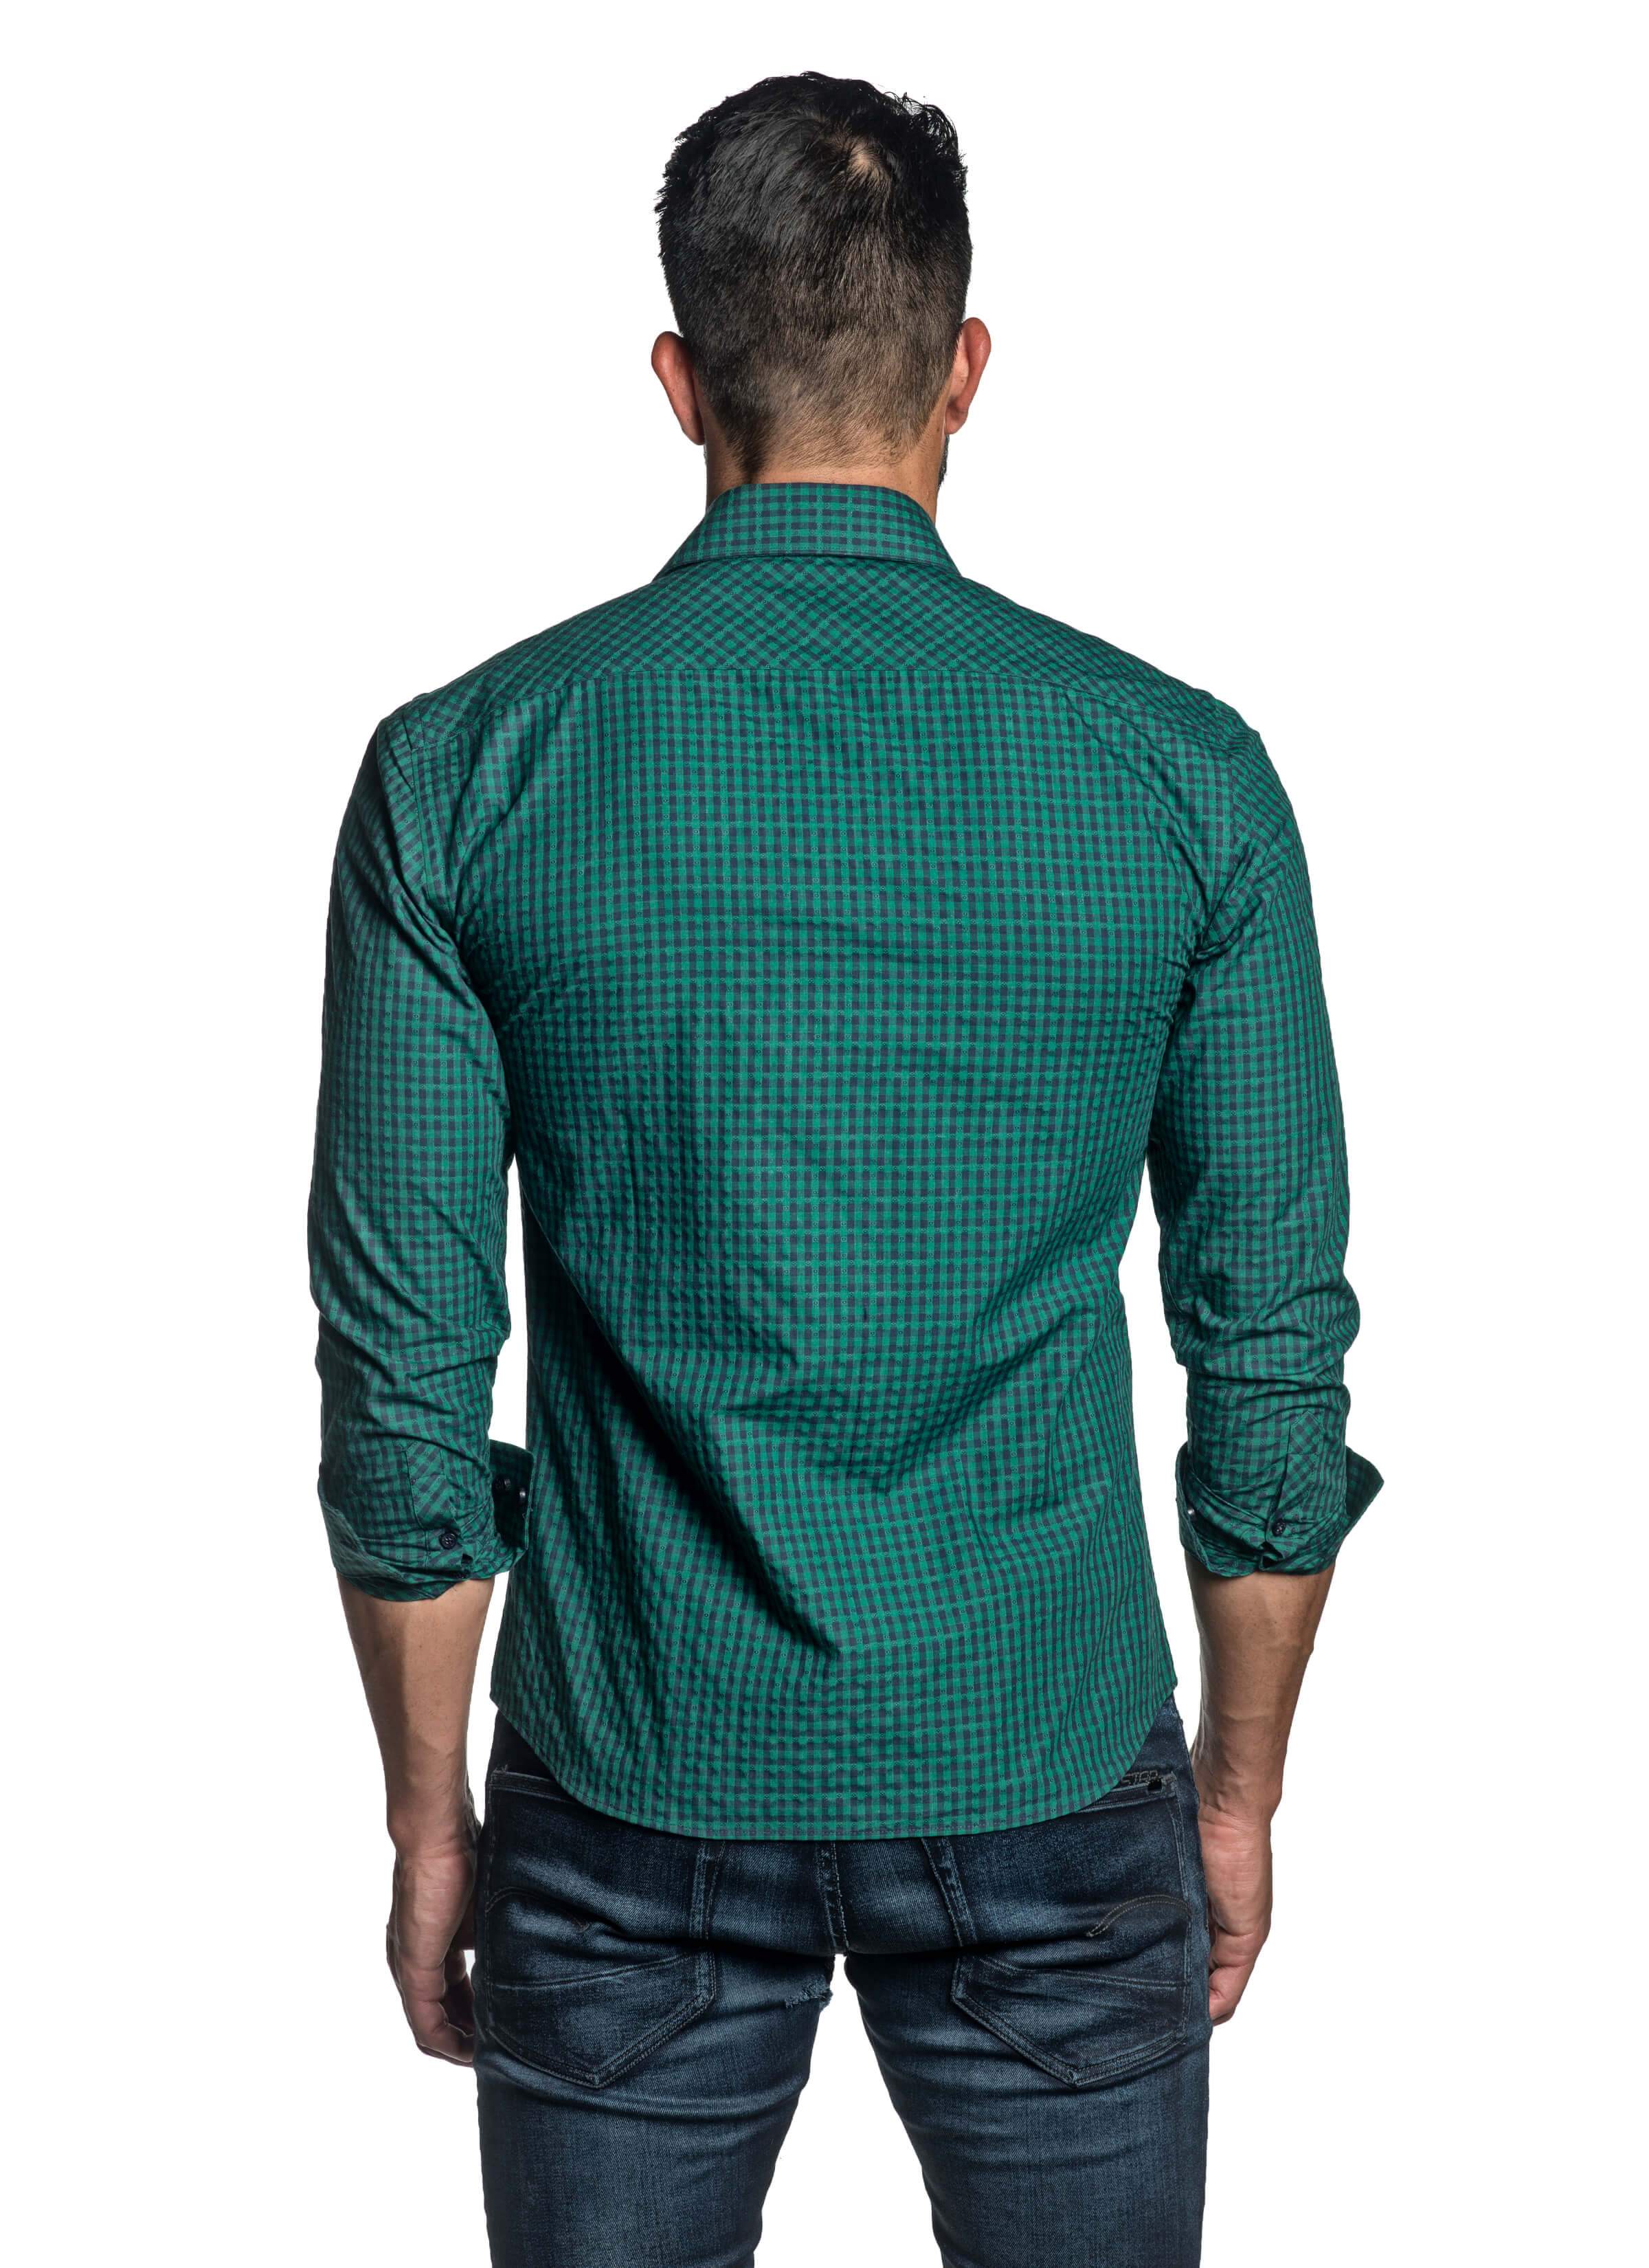 Green Check Shirt for Men OT-2683